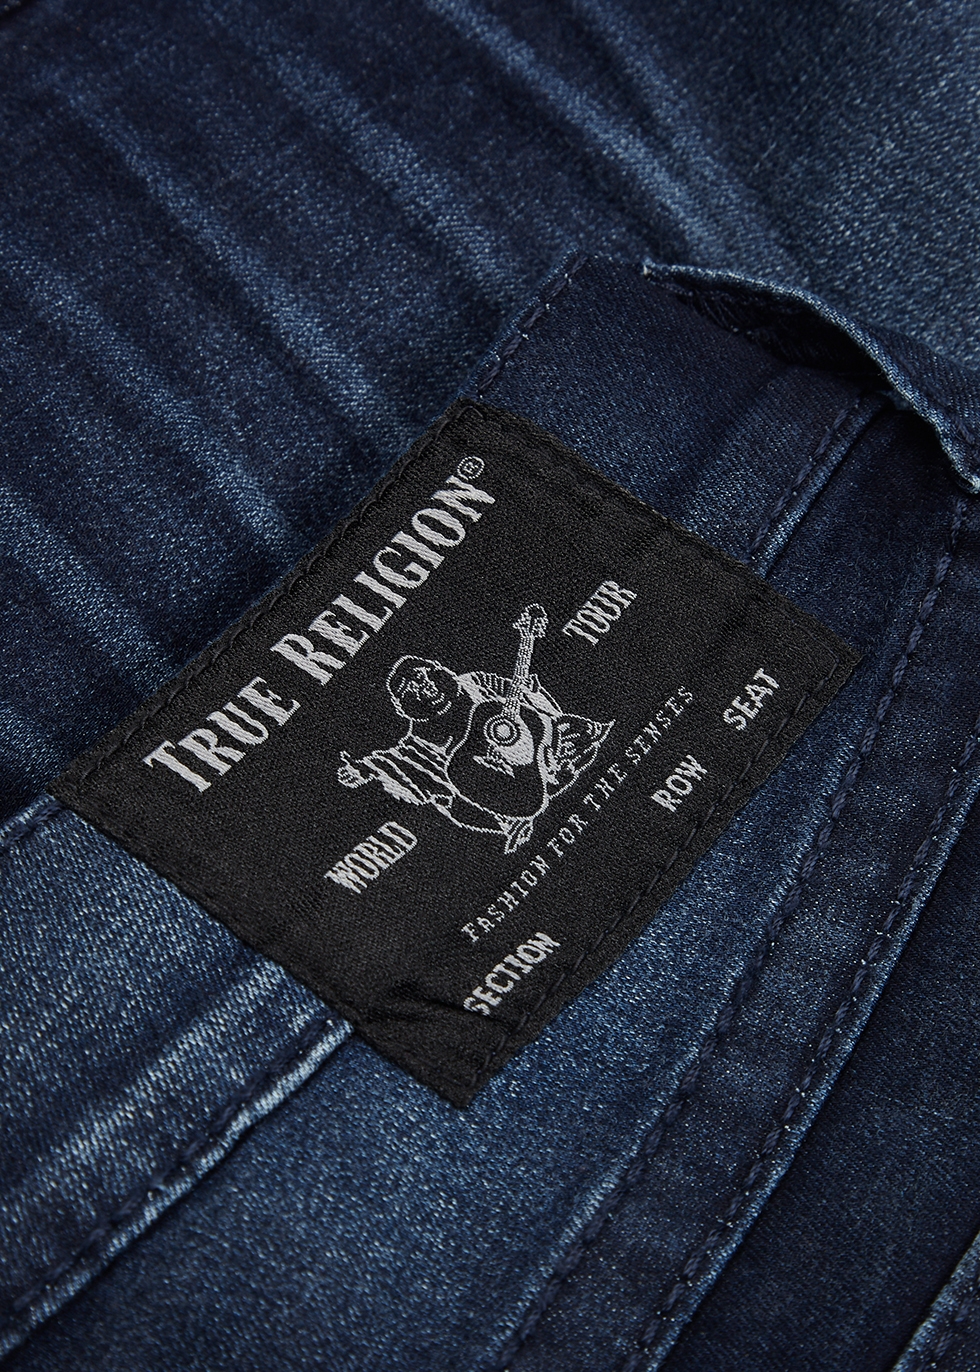 dark true religion jeans